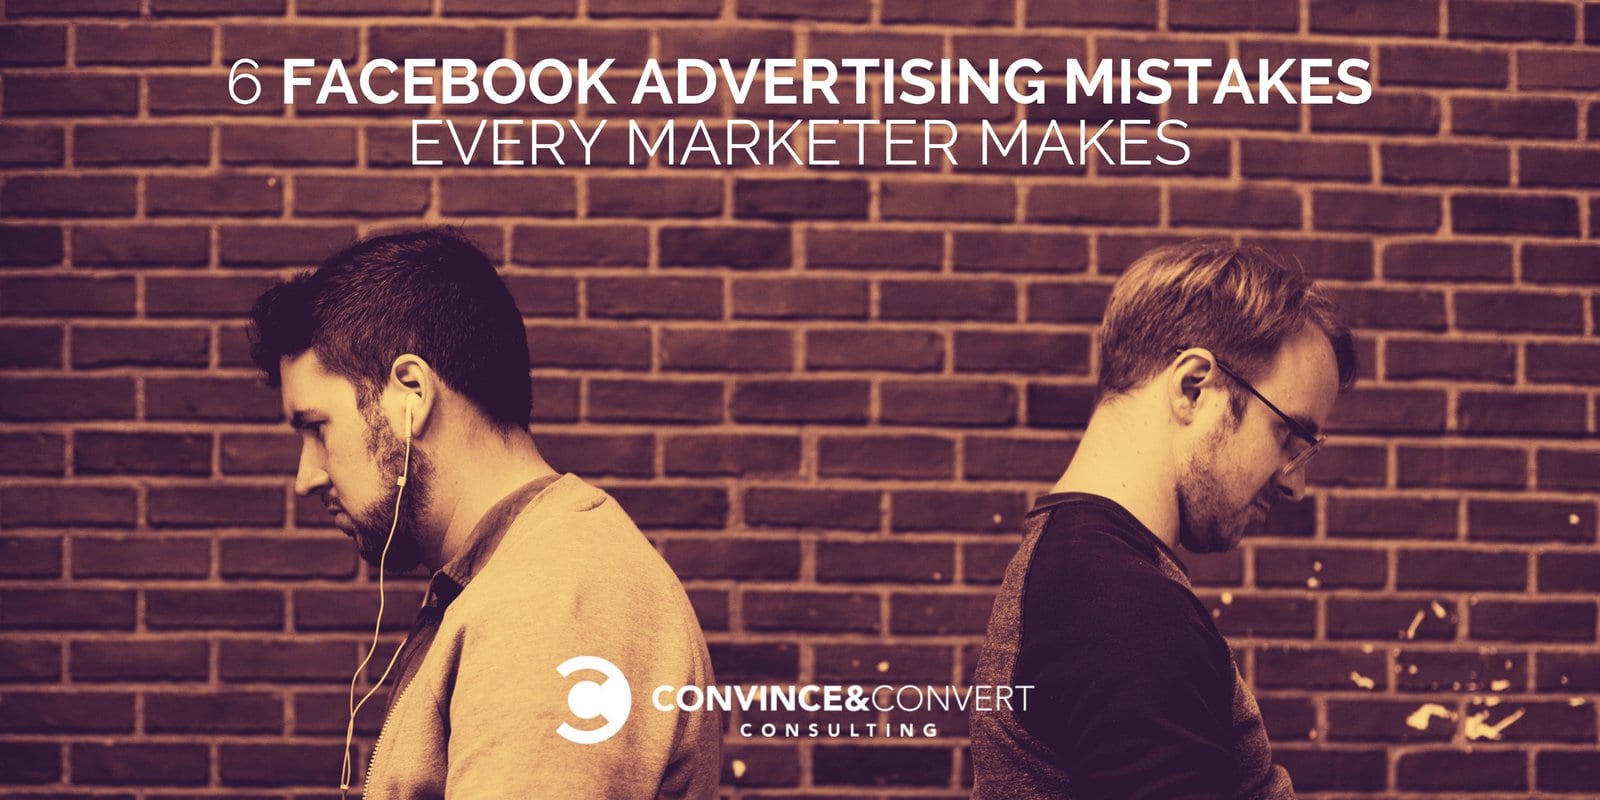 6-Facebook-Advertising-Mistakes-Every-Marketer-Makes.jpg